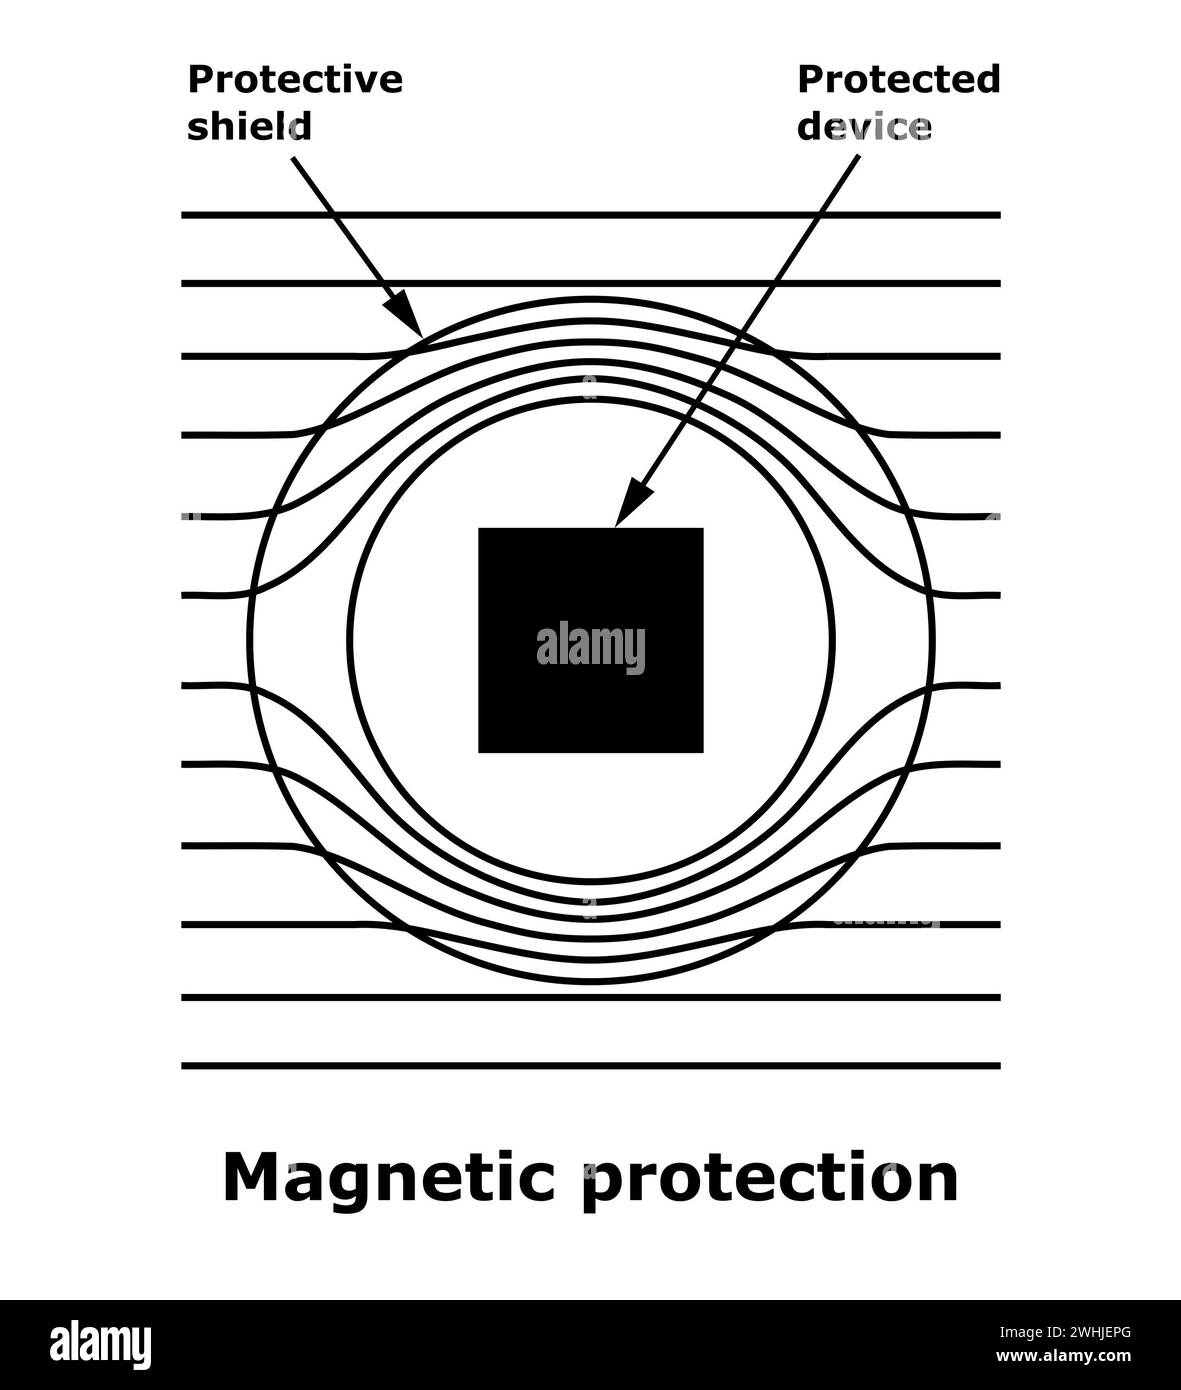 Magnetic protection illustration on white background Stock Photo